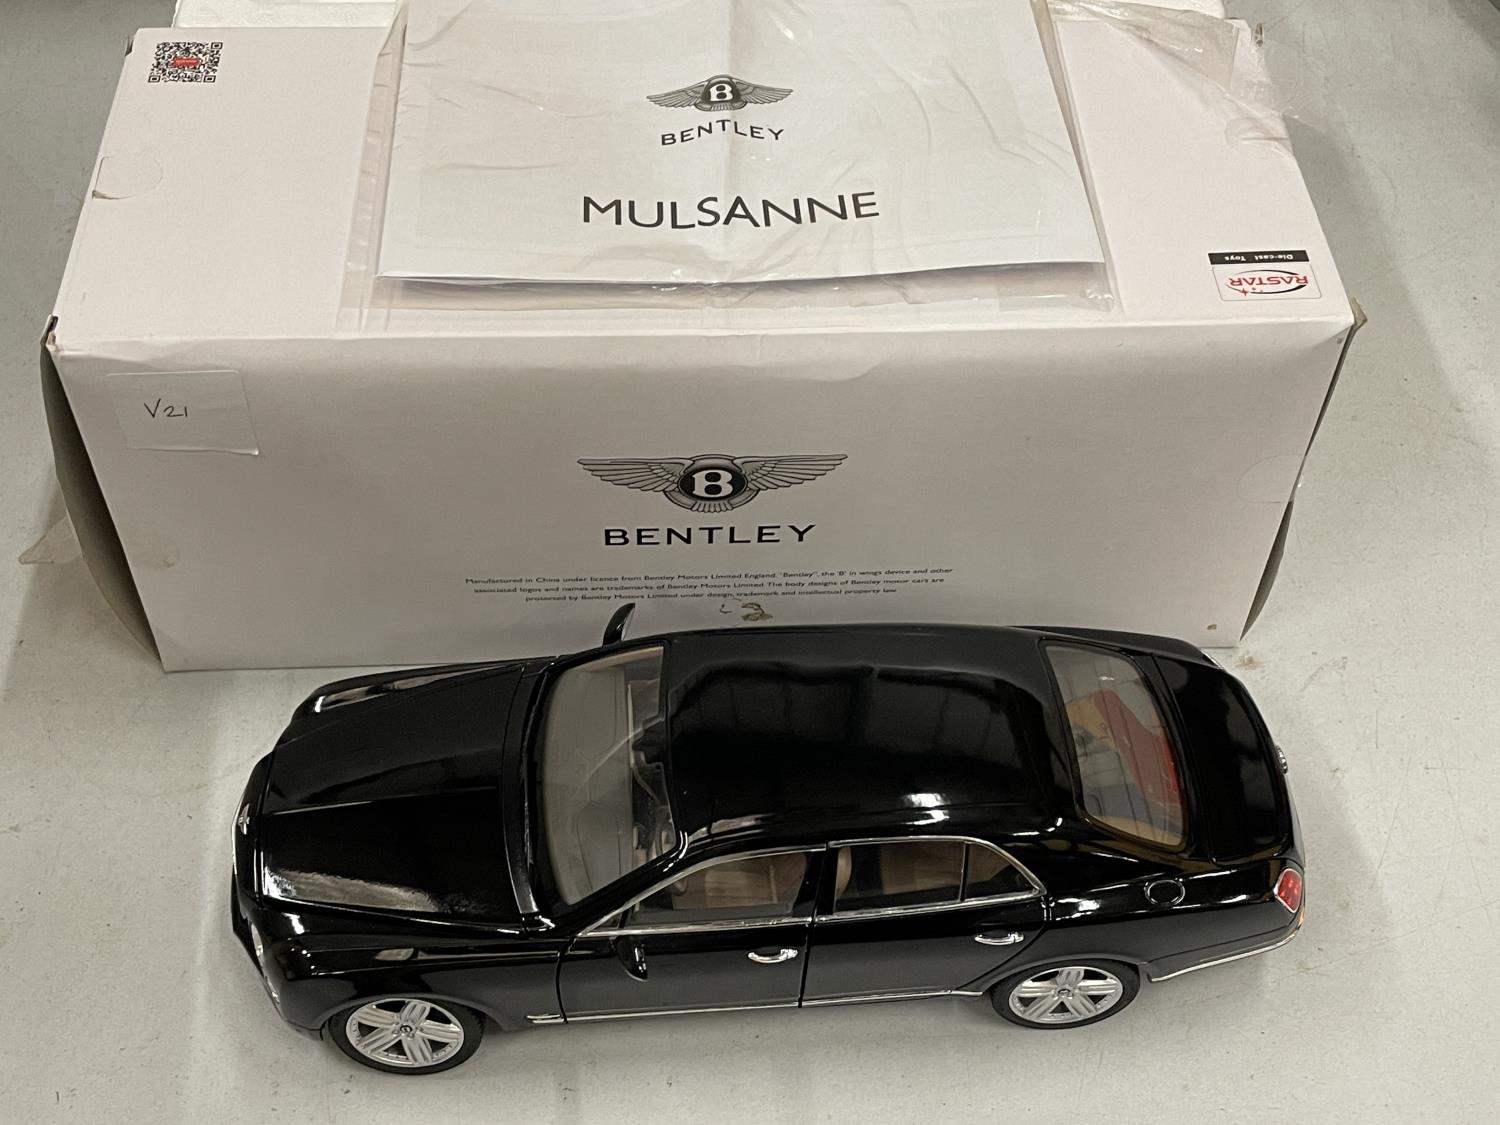 A BOXED MULSANNE BENTLEY MODEL CAR 1:18 SCALE